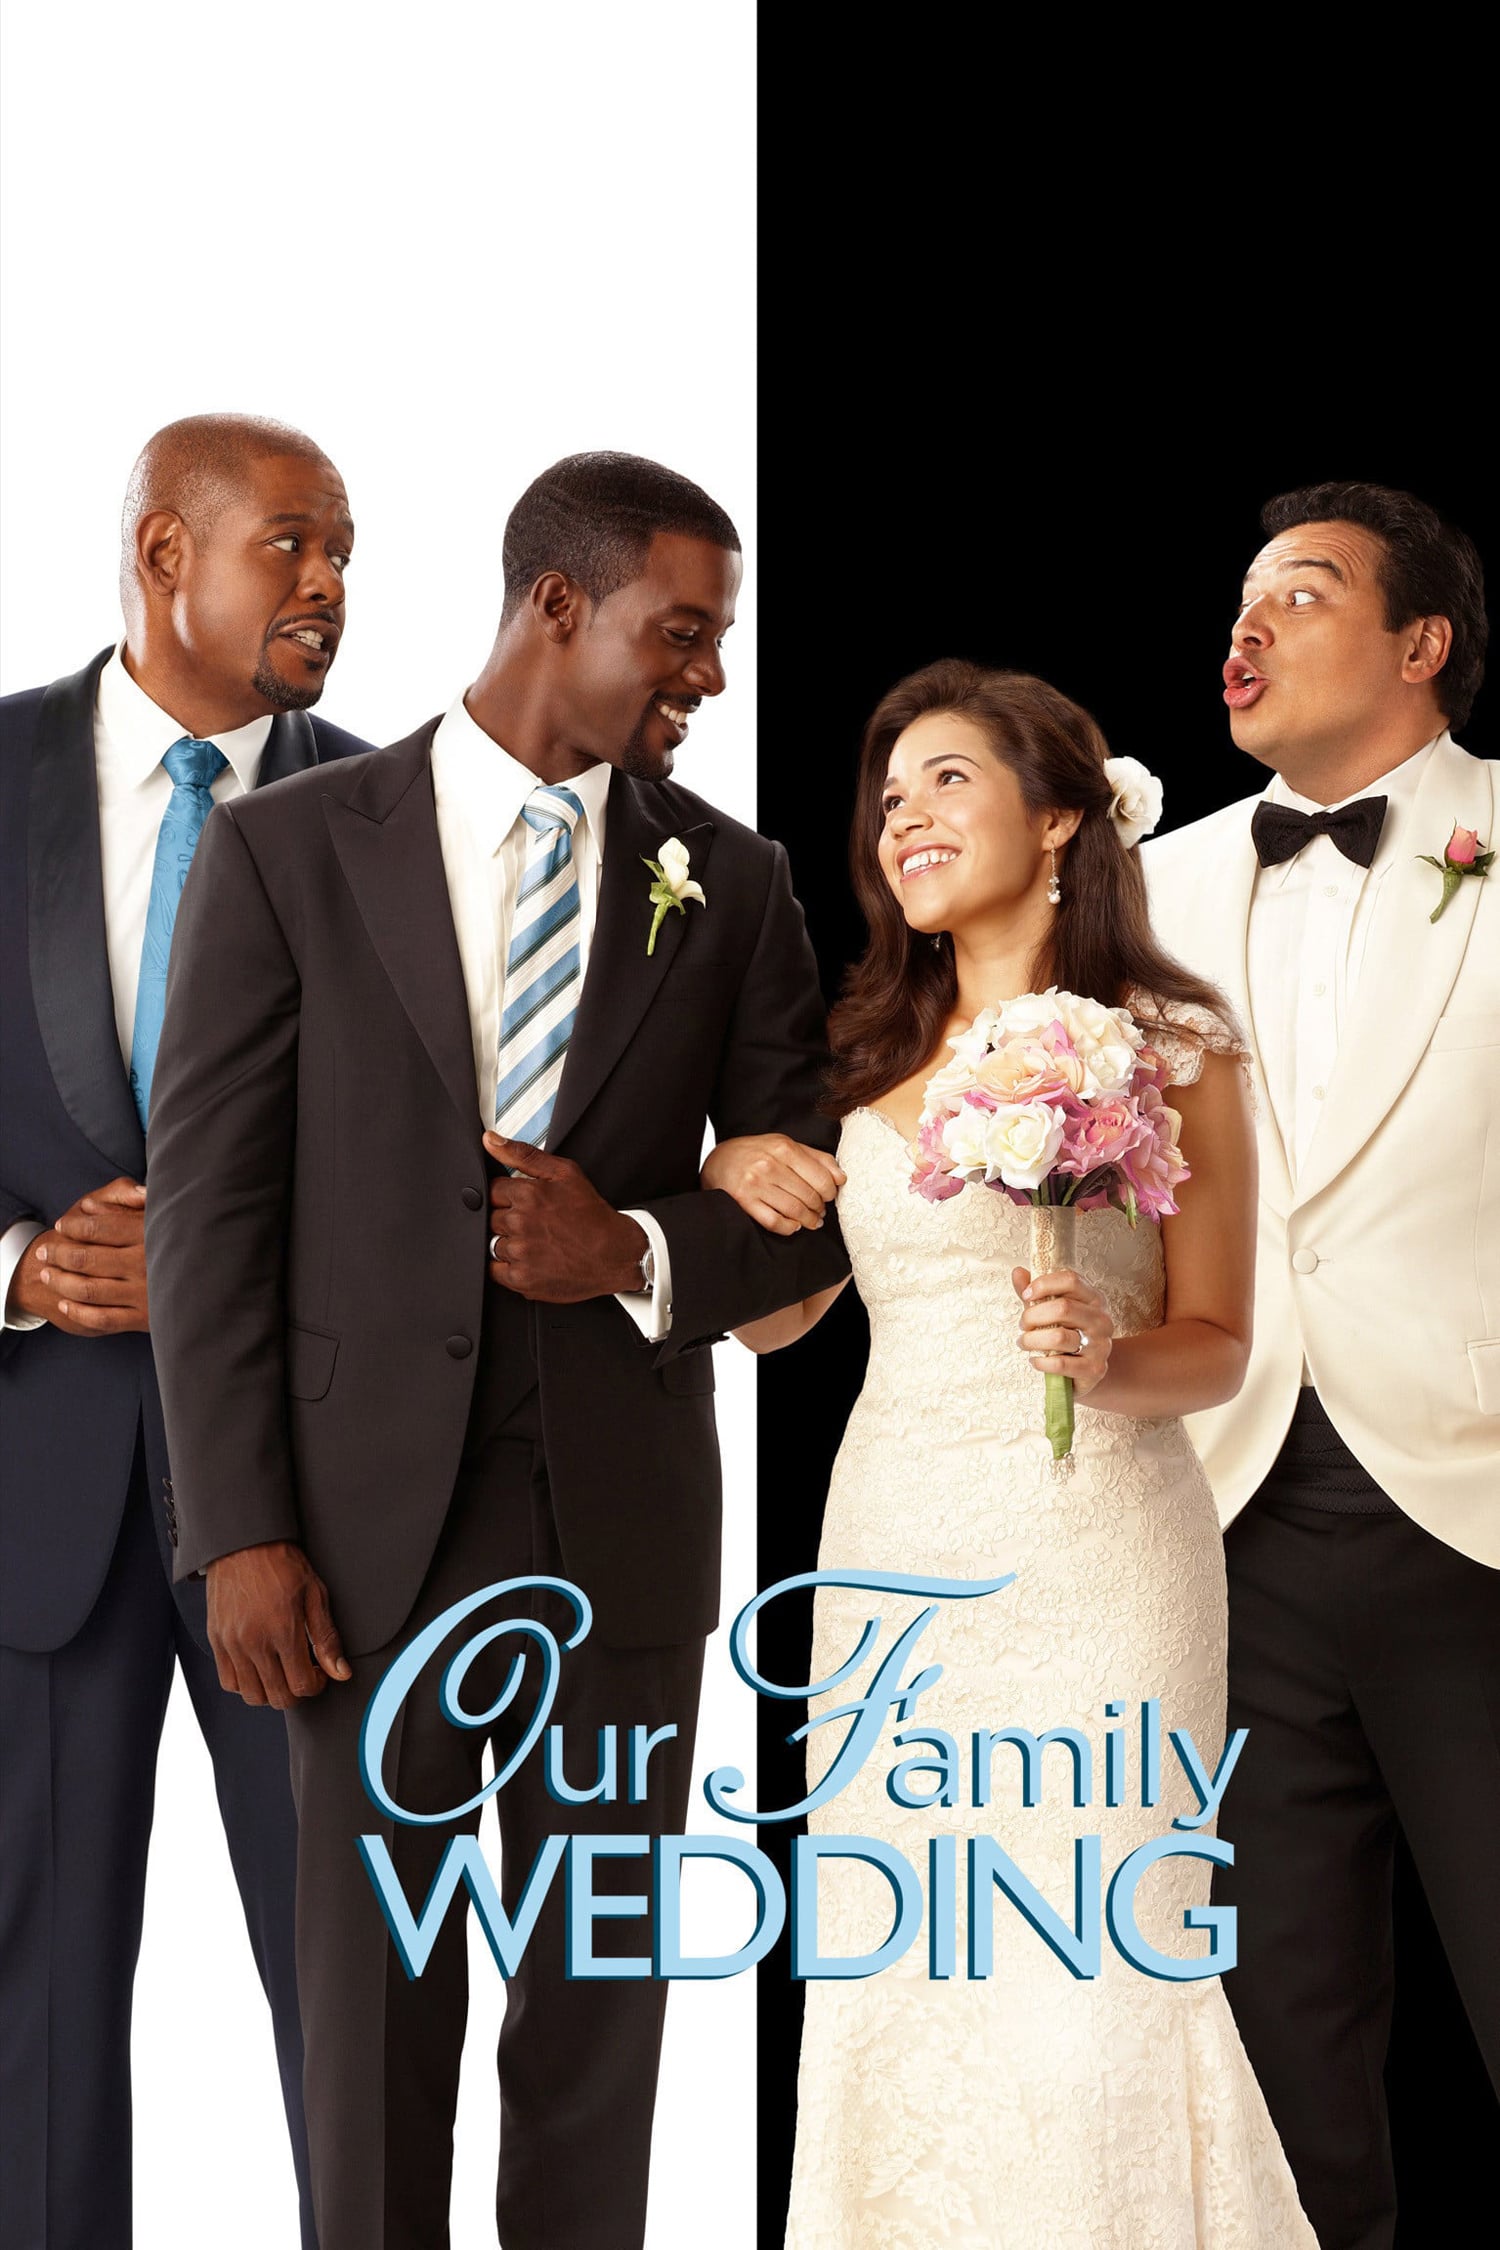 Plakat von "Our Family Wedding"